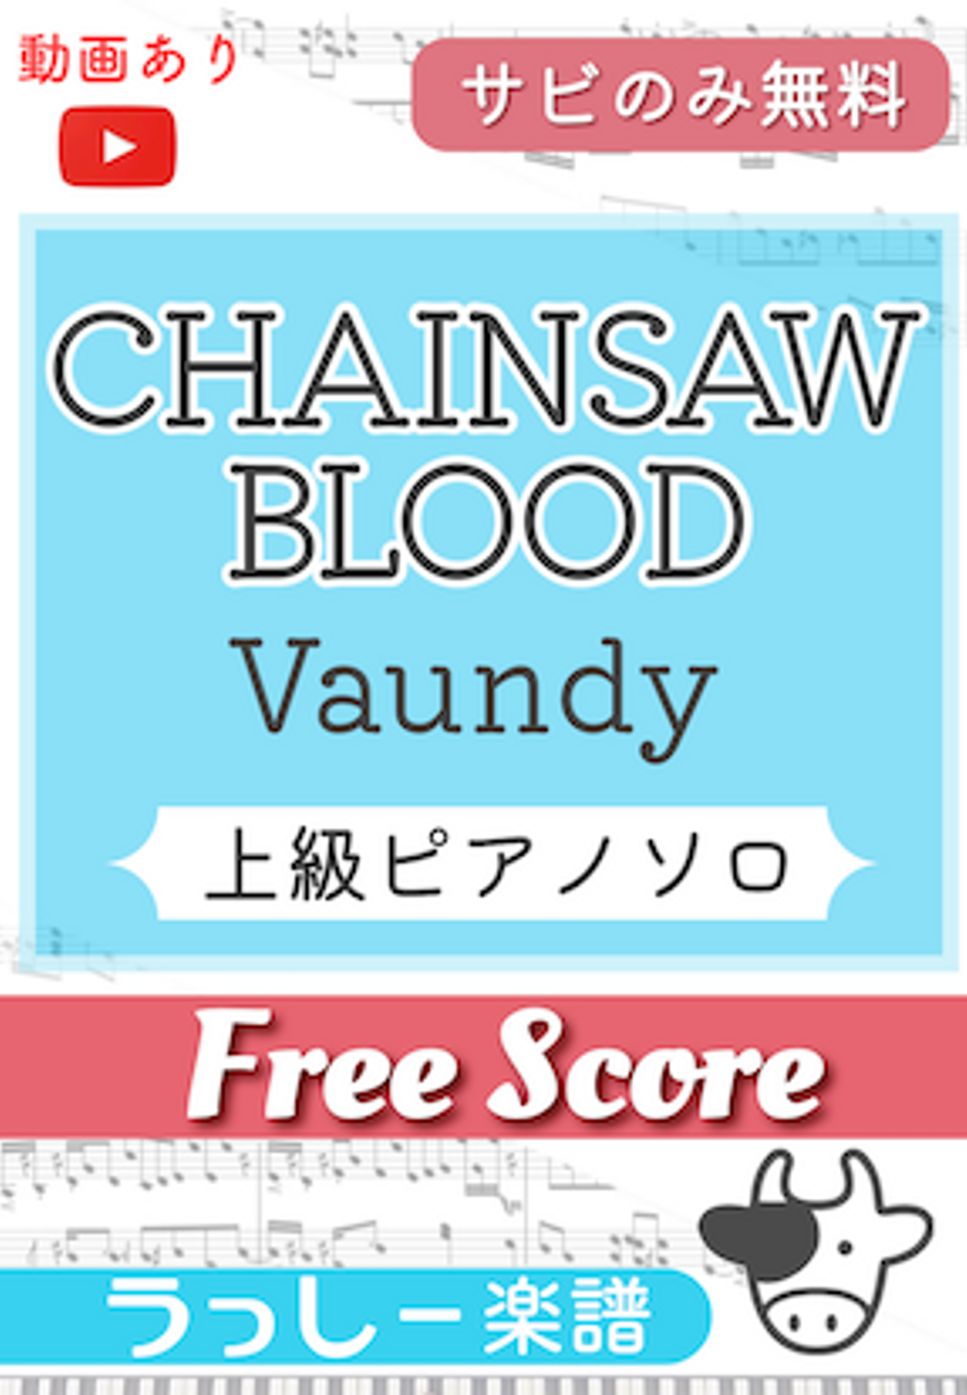 Vaundy - CHAINSAW BLOOD (サビのみ無料) by 牛武奏人